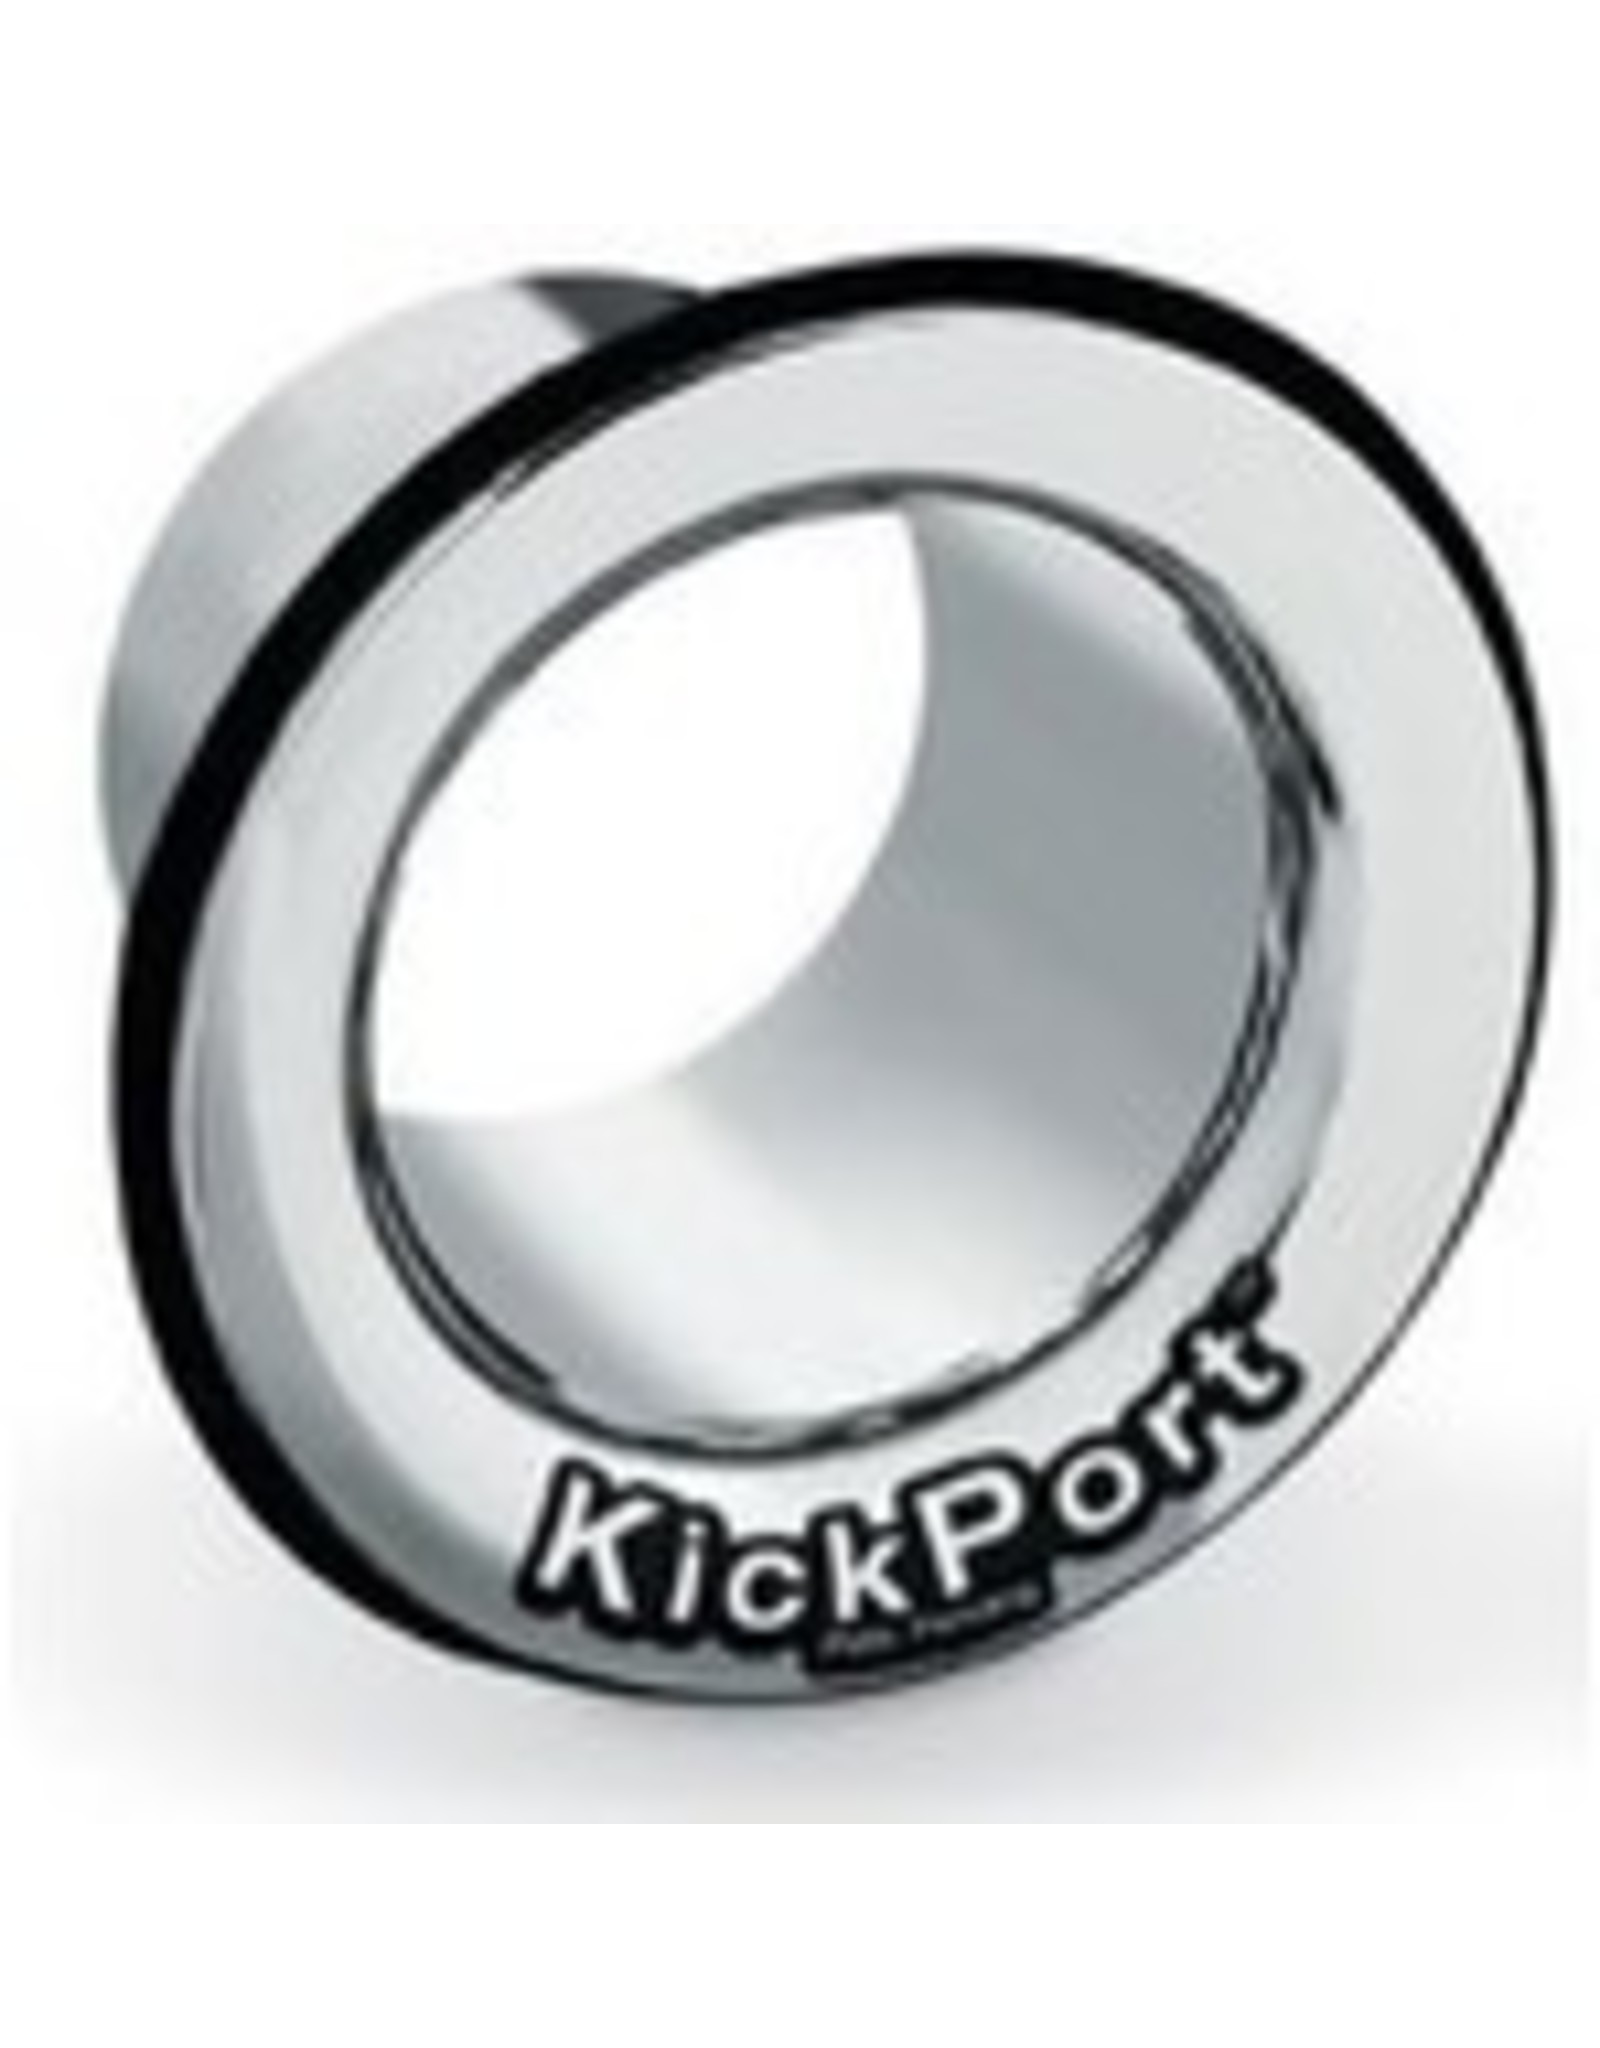 Kickport  KP2_BL black damping control bass booster